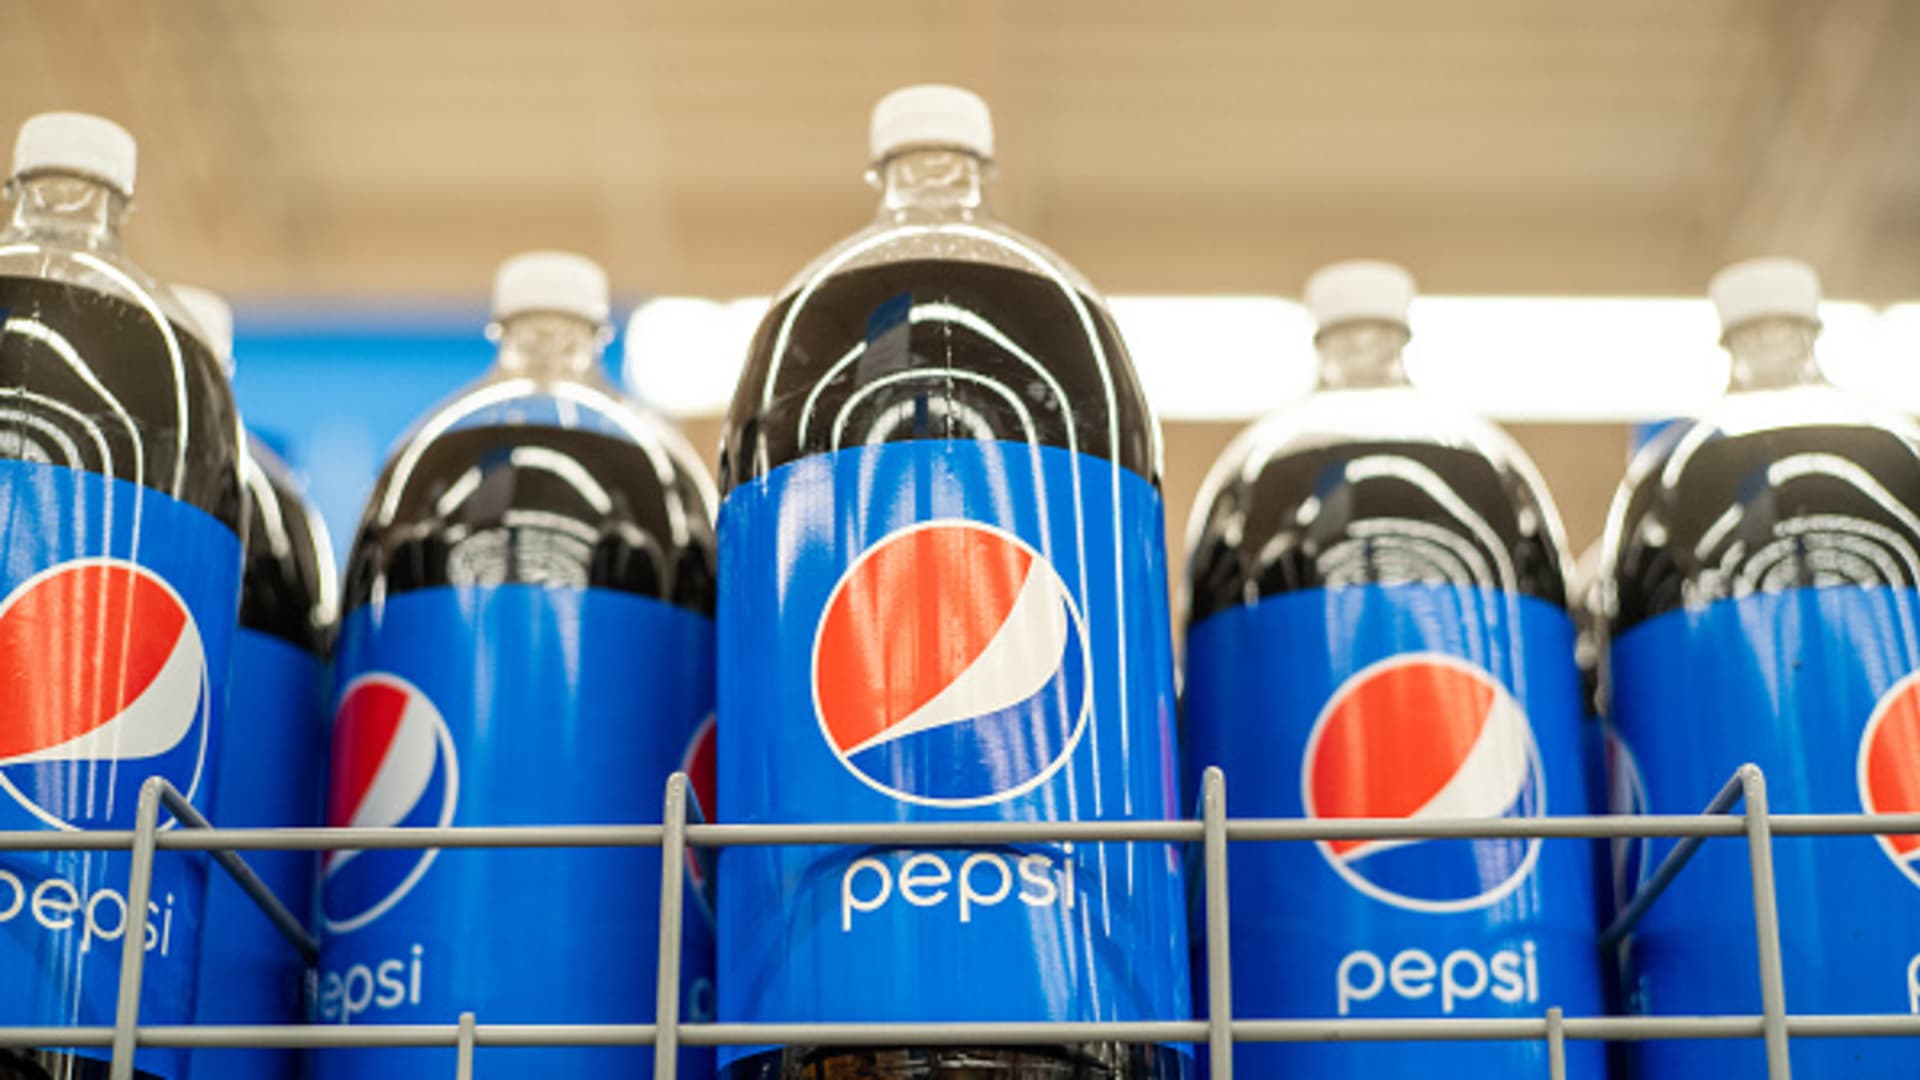 PepsiCo (PEP) Q4 2022 earnings